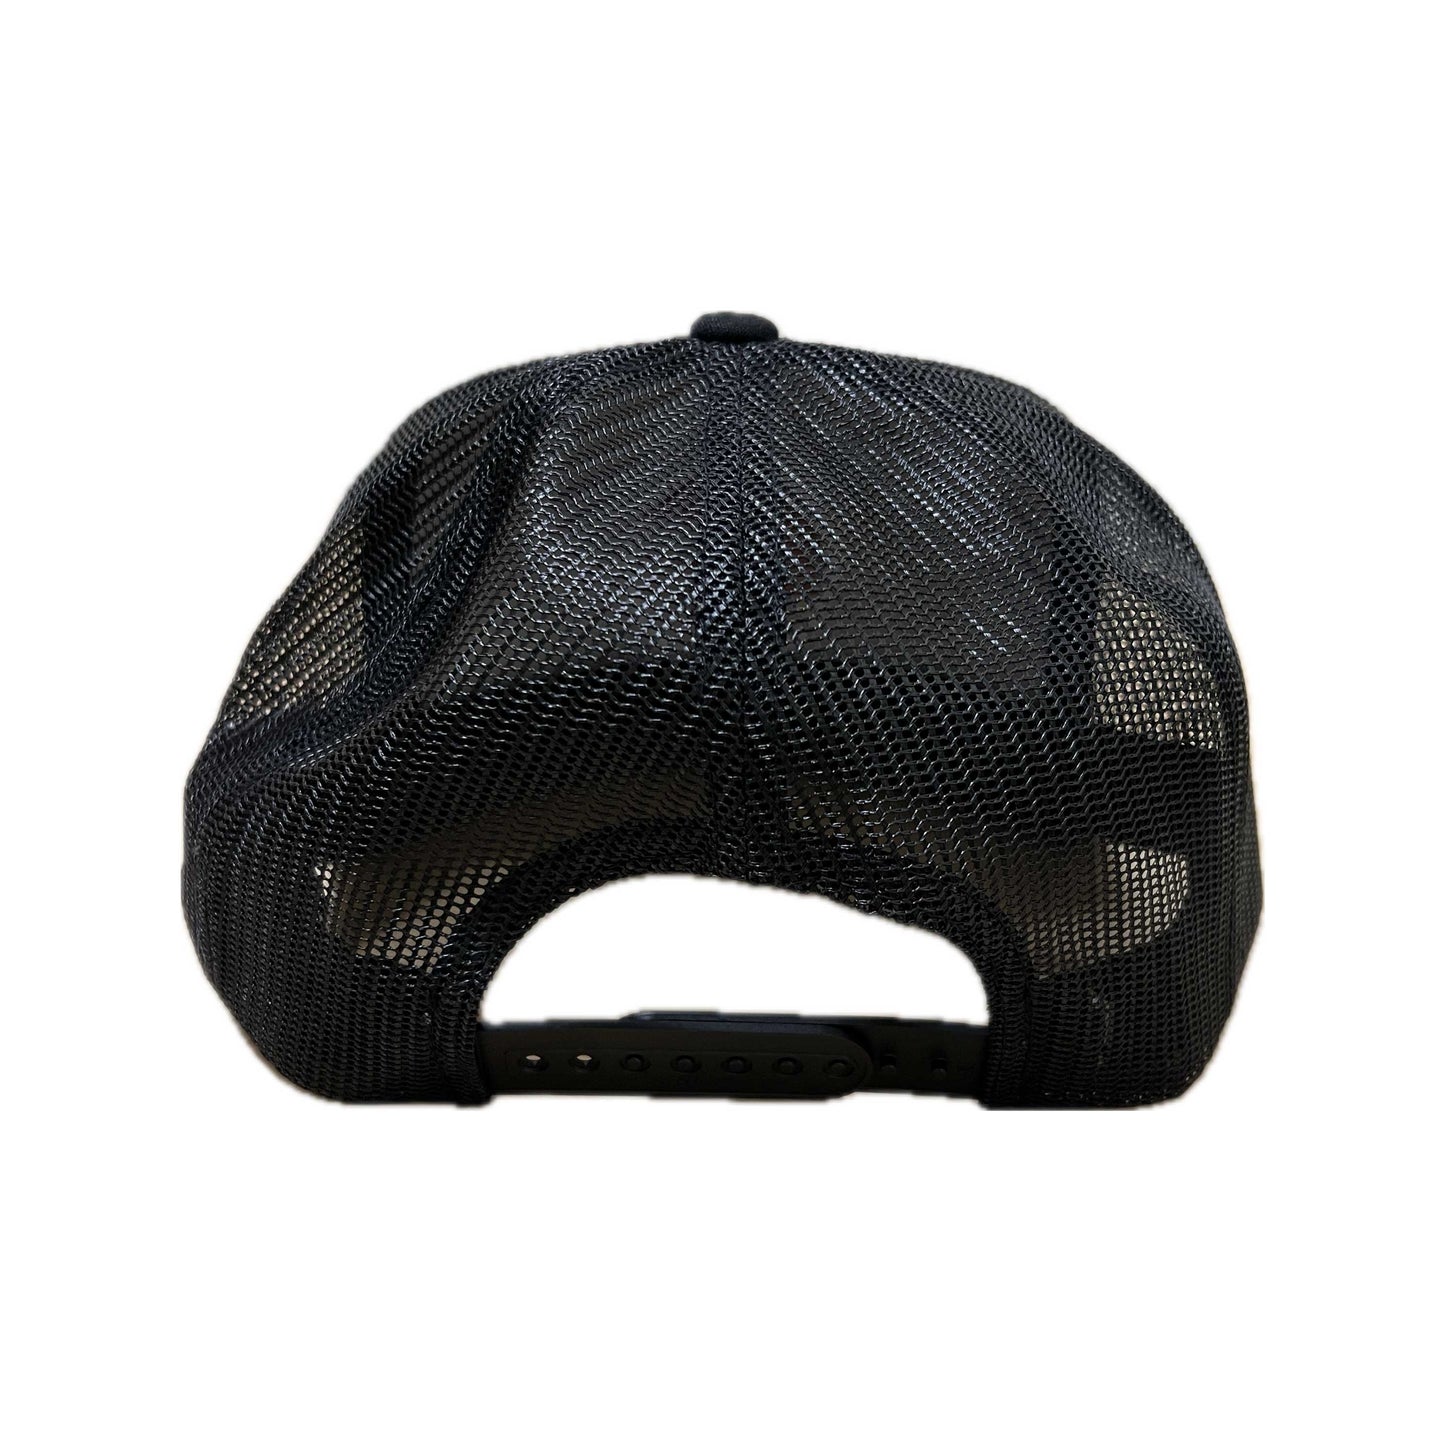 HI logo Snapback hats Black Denim Mesh